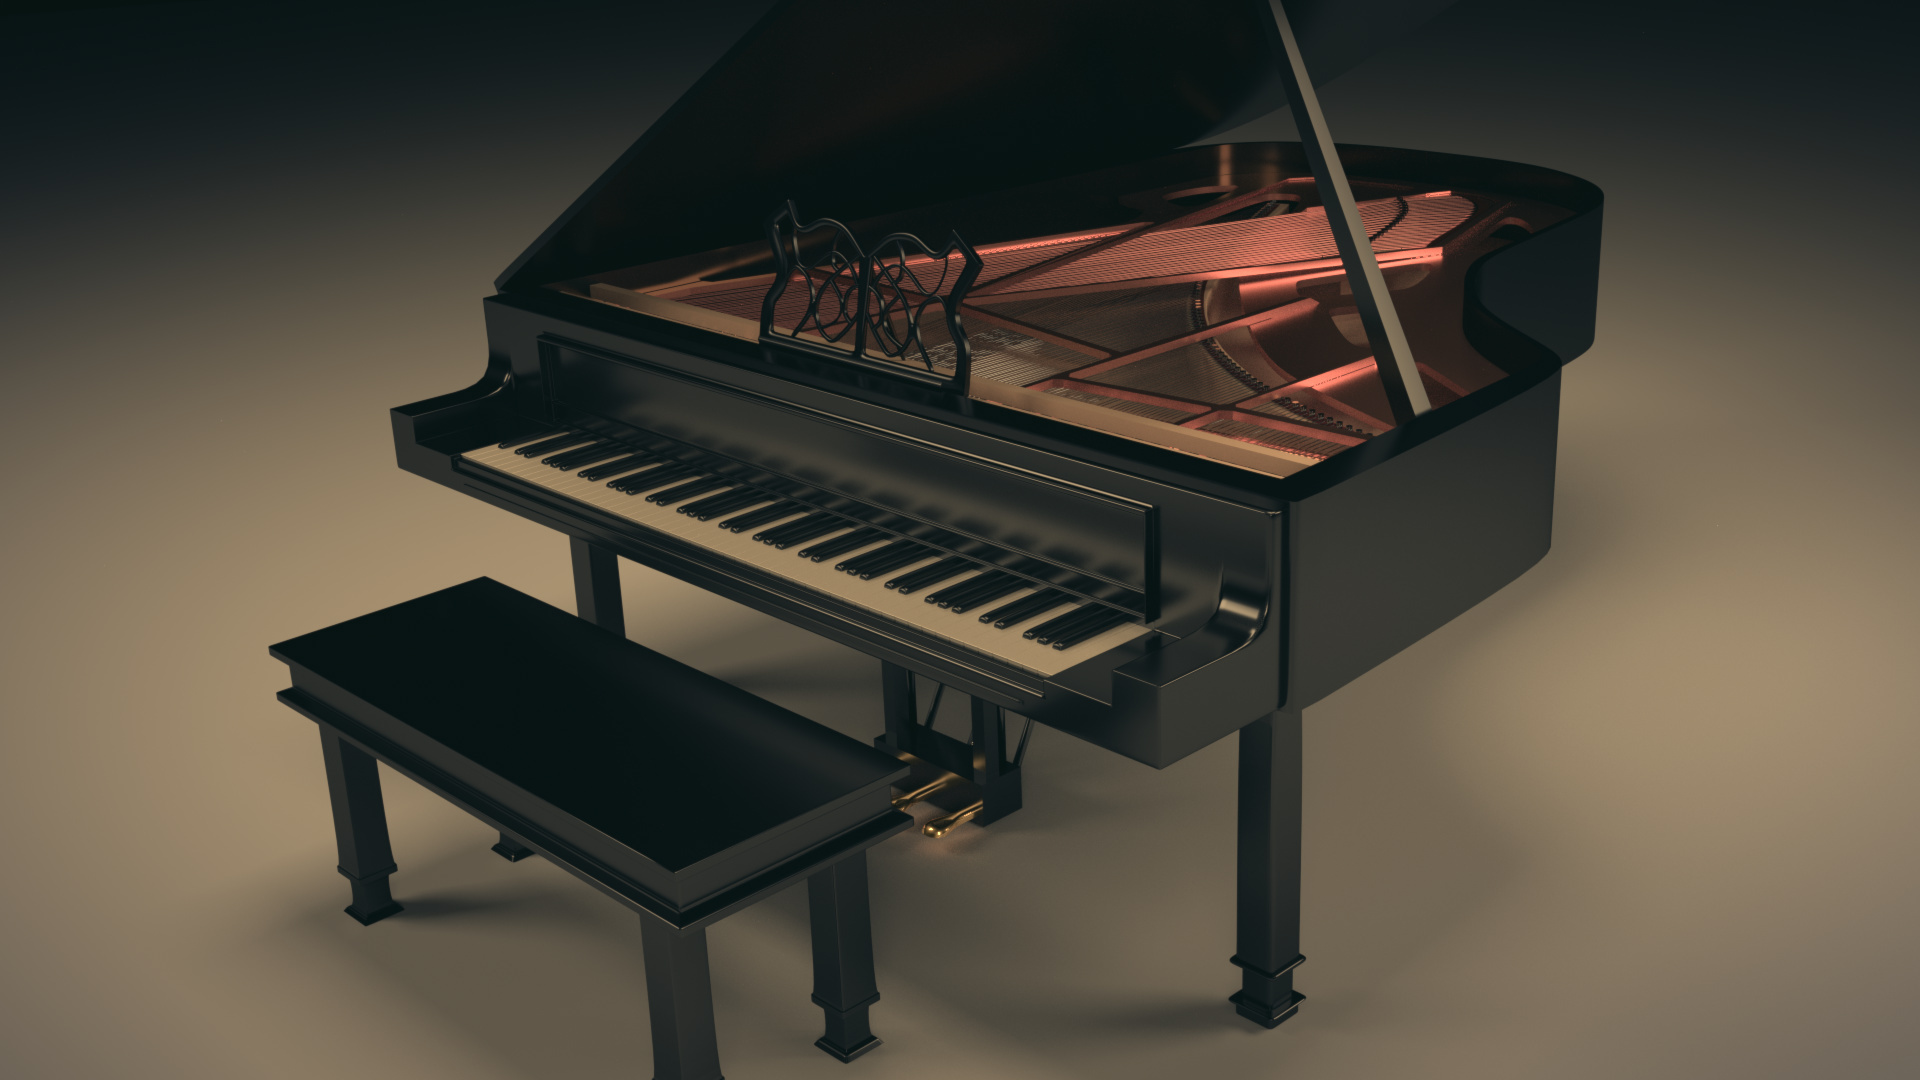 Fortepiano: Grand Piano, Blender Artists Community, 3D-Modeling, Computer Graphics. 1920x1080 Full HD Wallpaper.